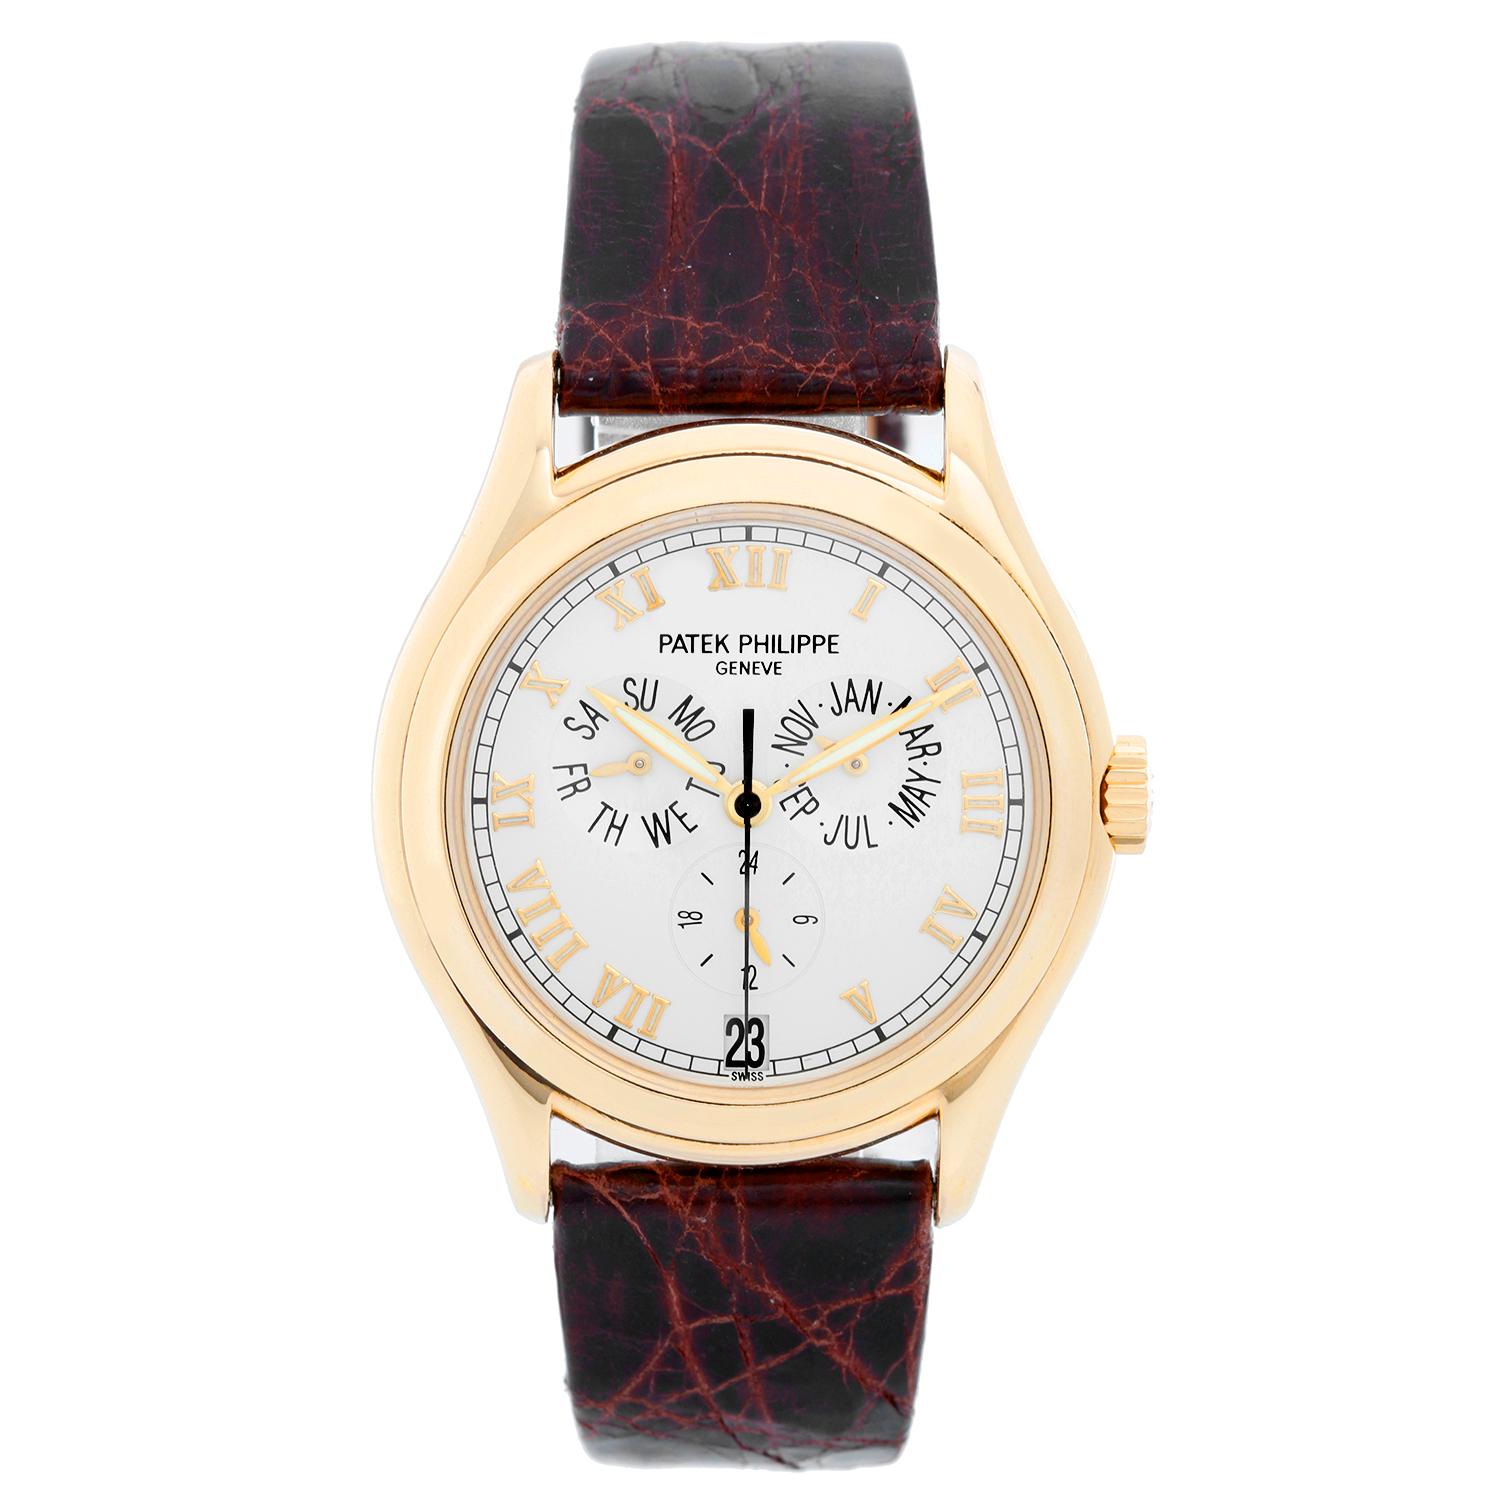 Patek Philippe Annular Calendar 18 Karat Gold Men's Watch 5035 J ‘or 5035j’